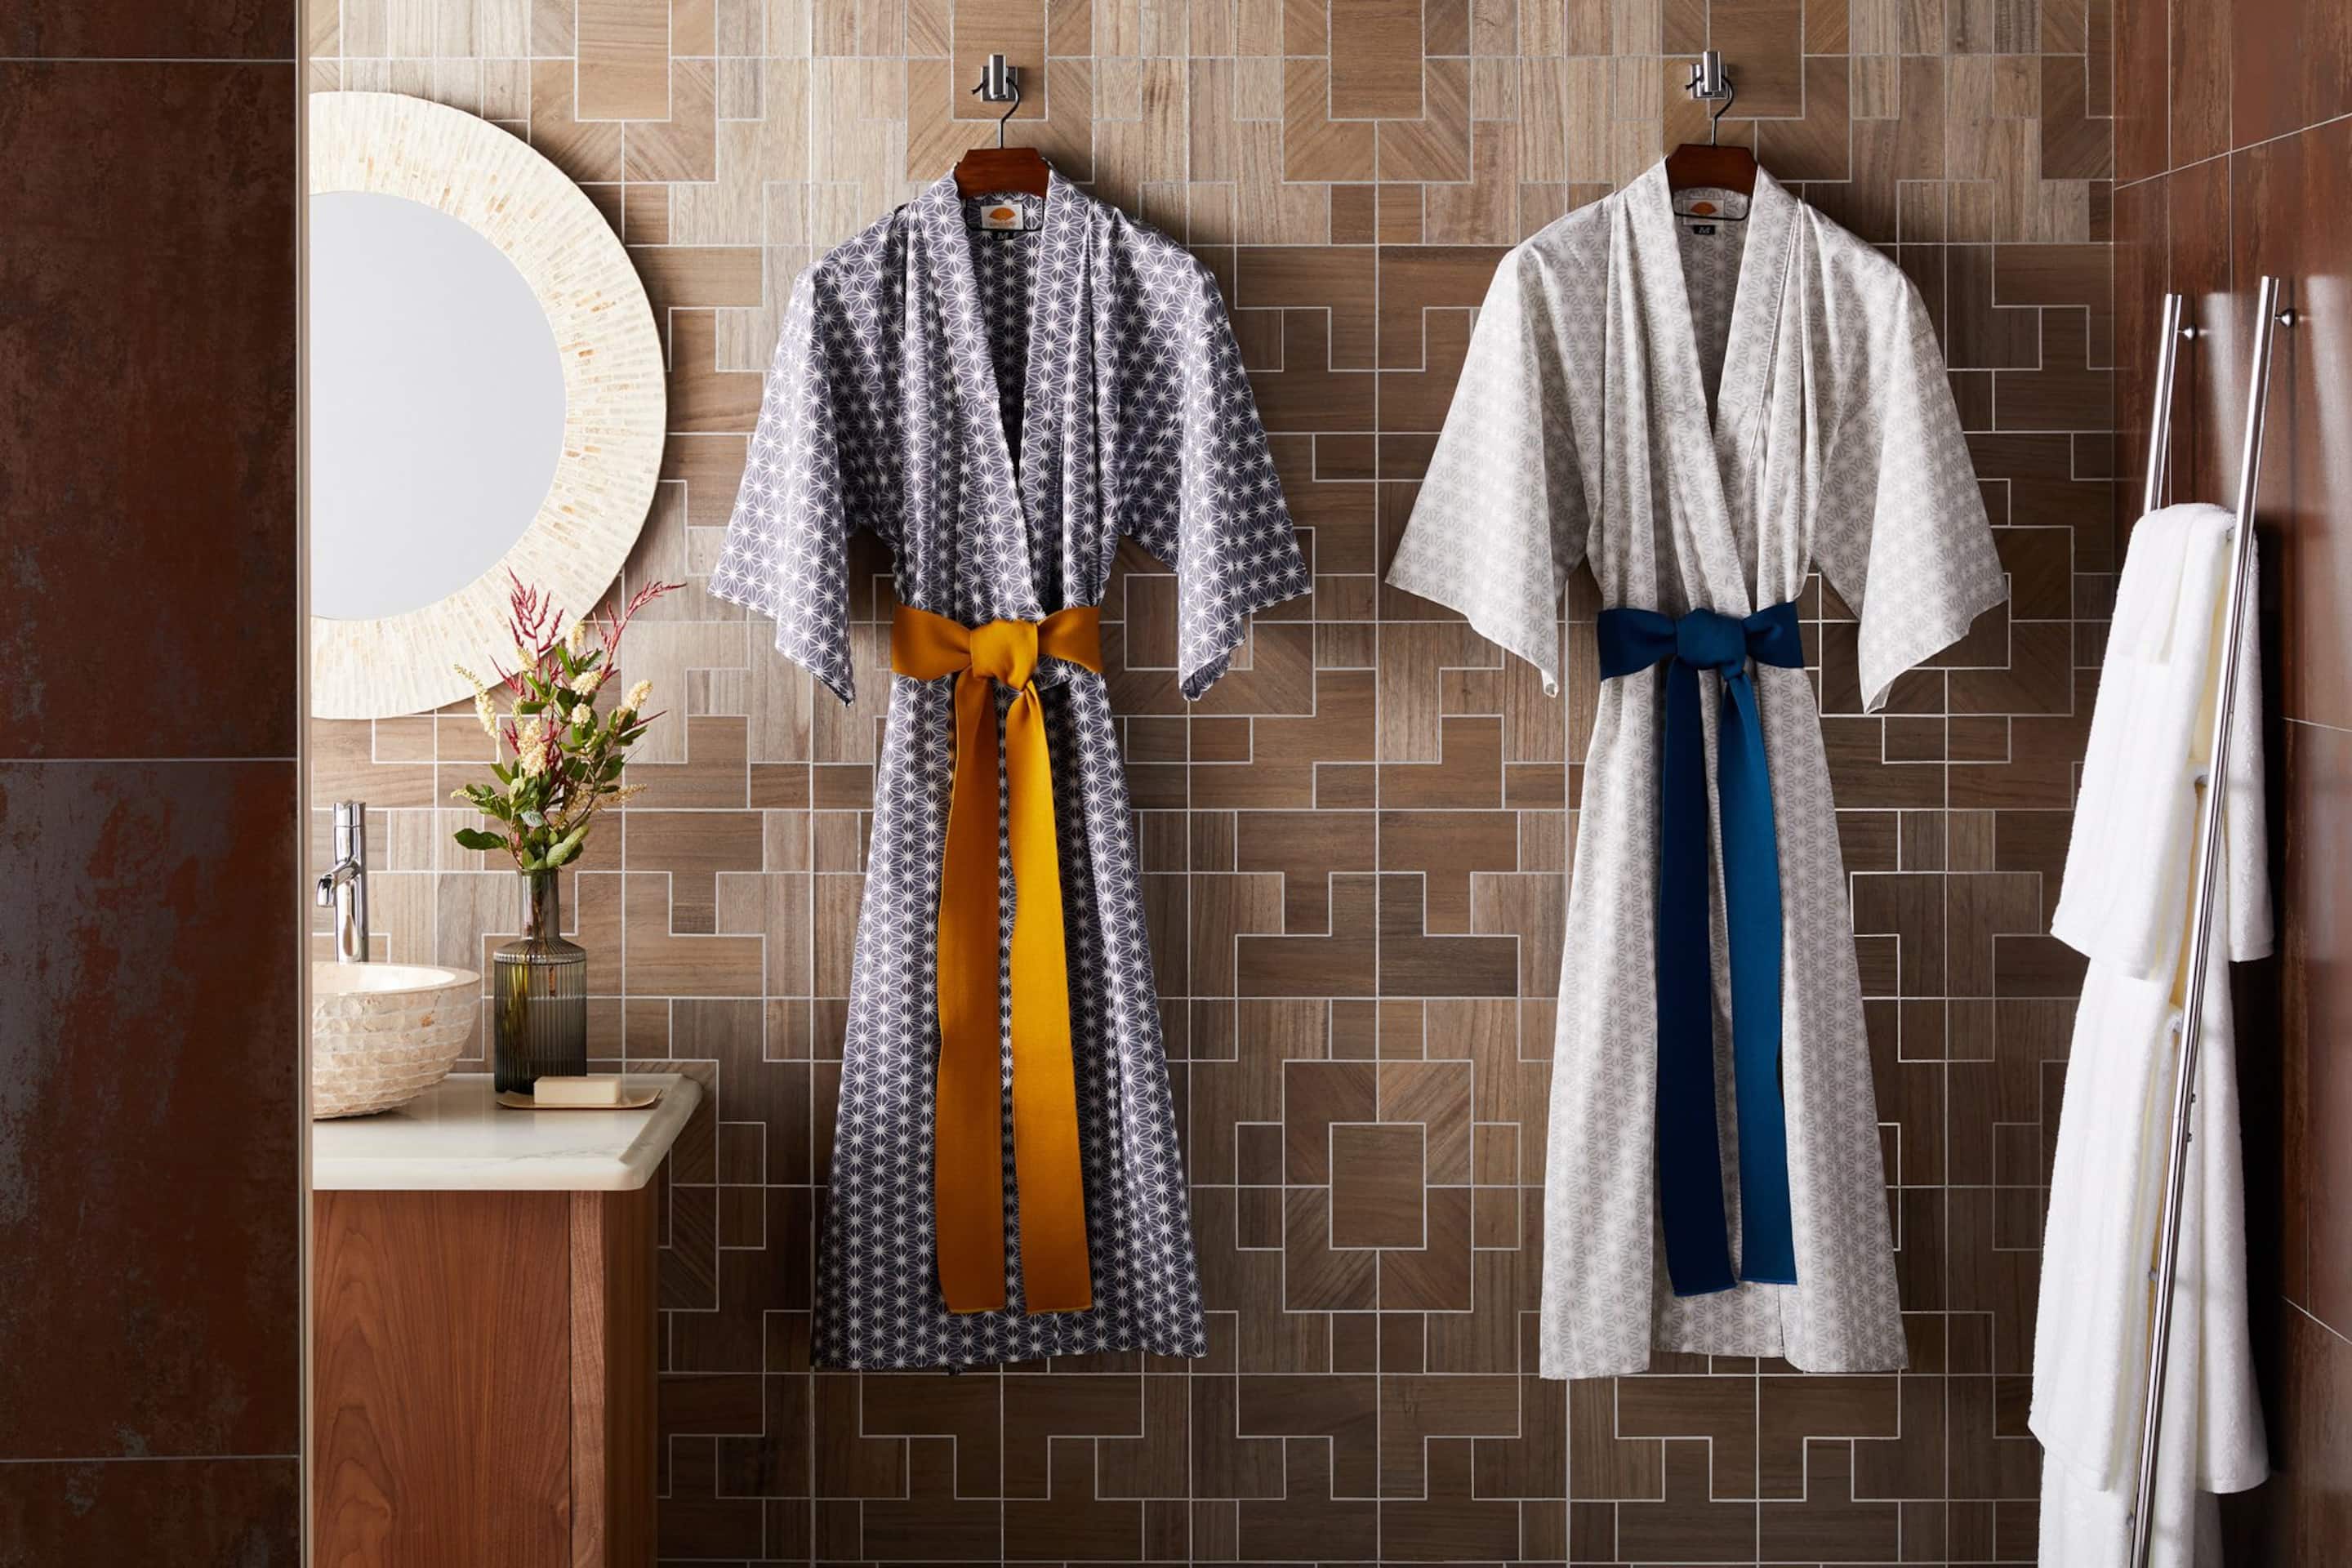 Japanese bathrobes